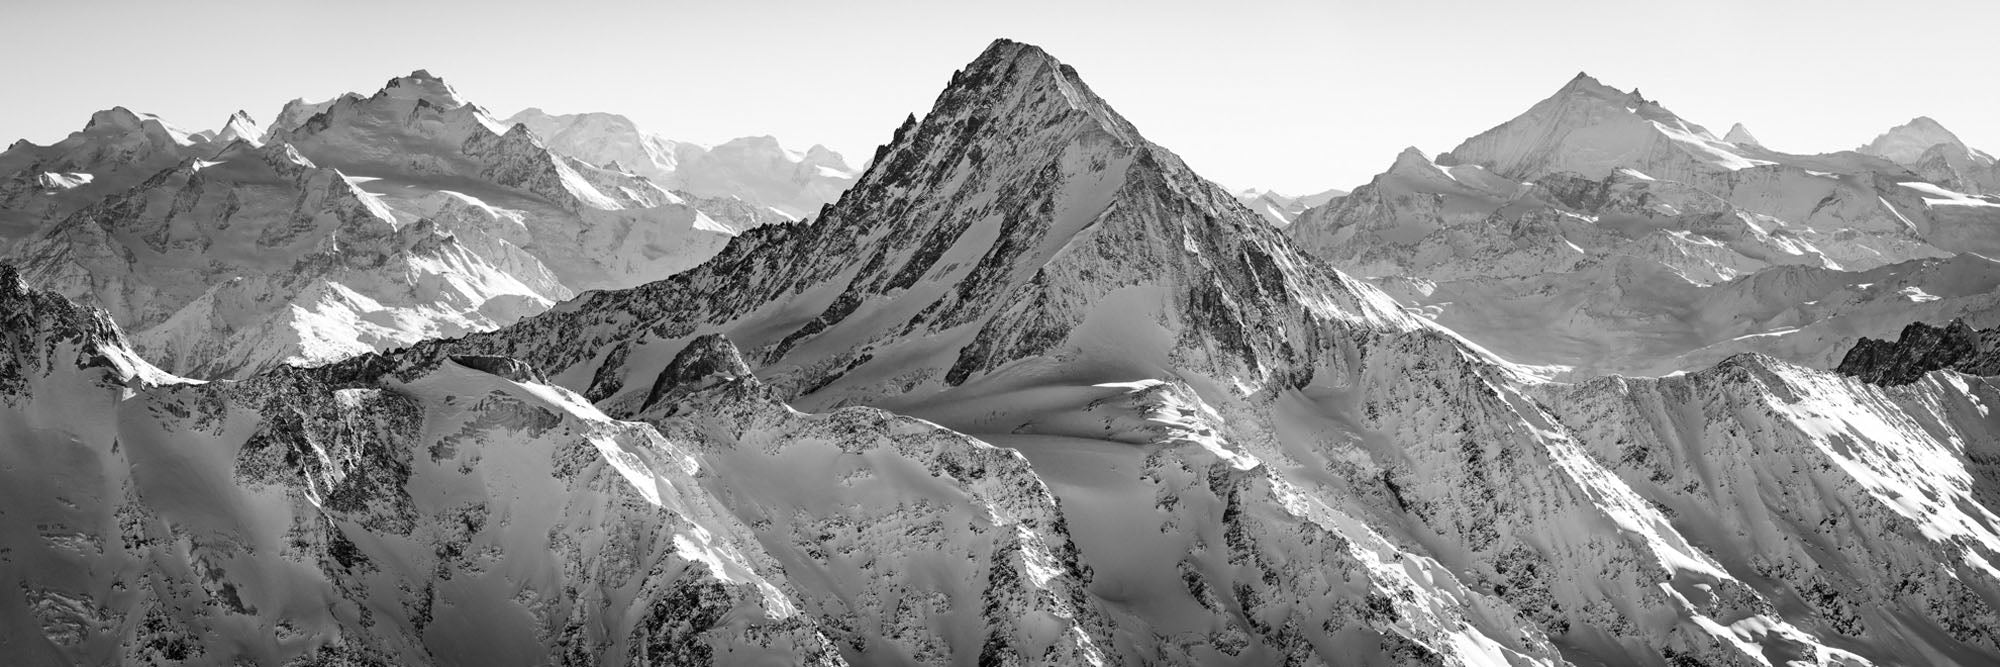 Valais Alps, Panorama, Switzerland (DSC9592)